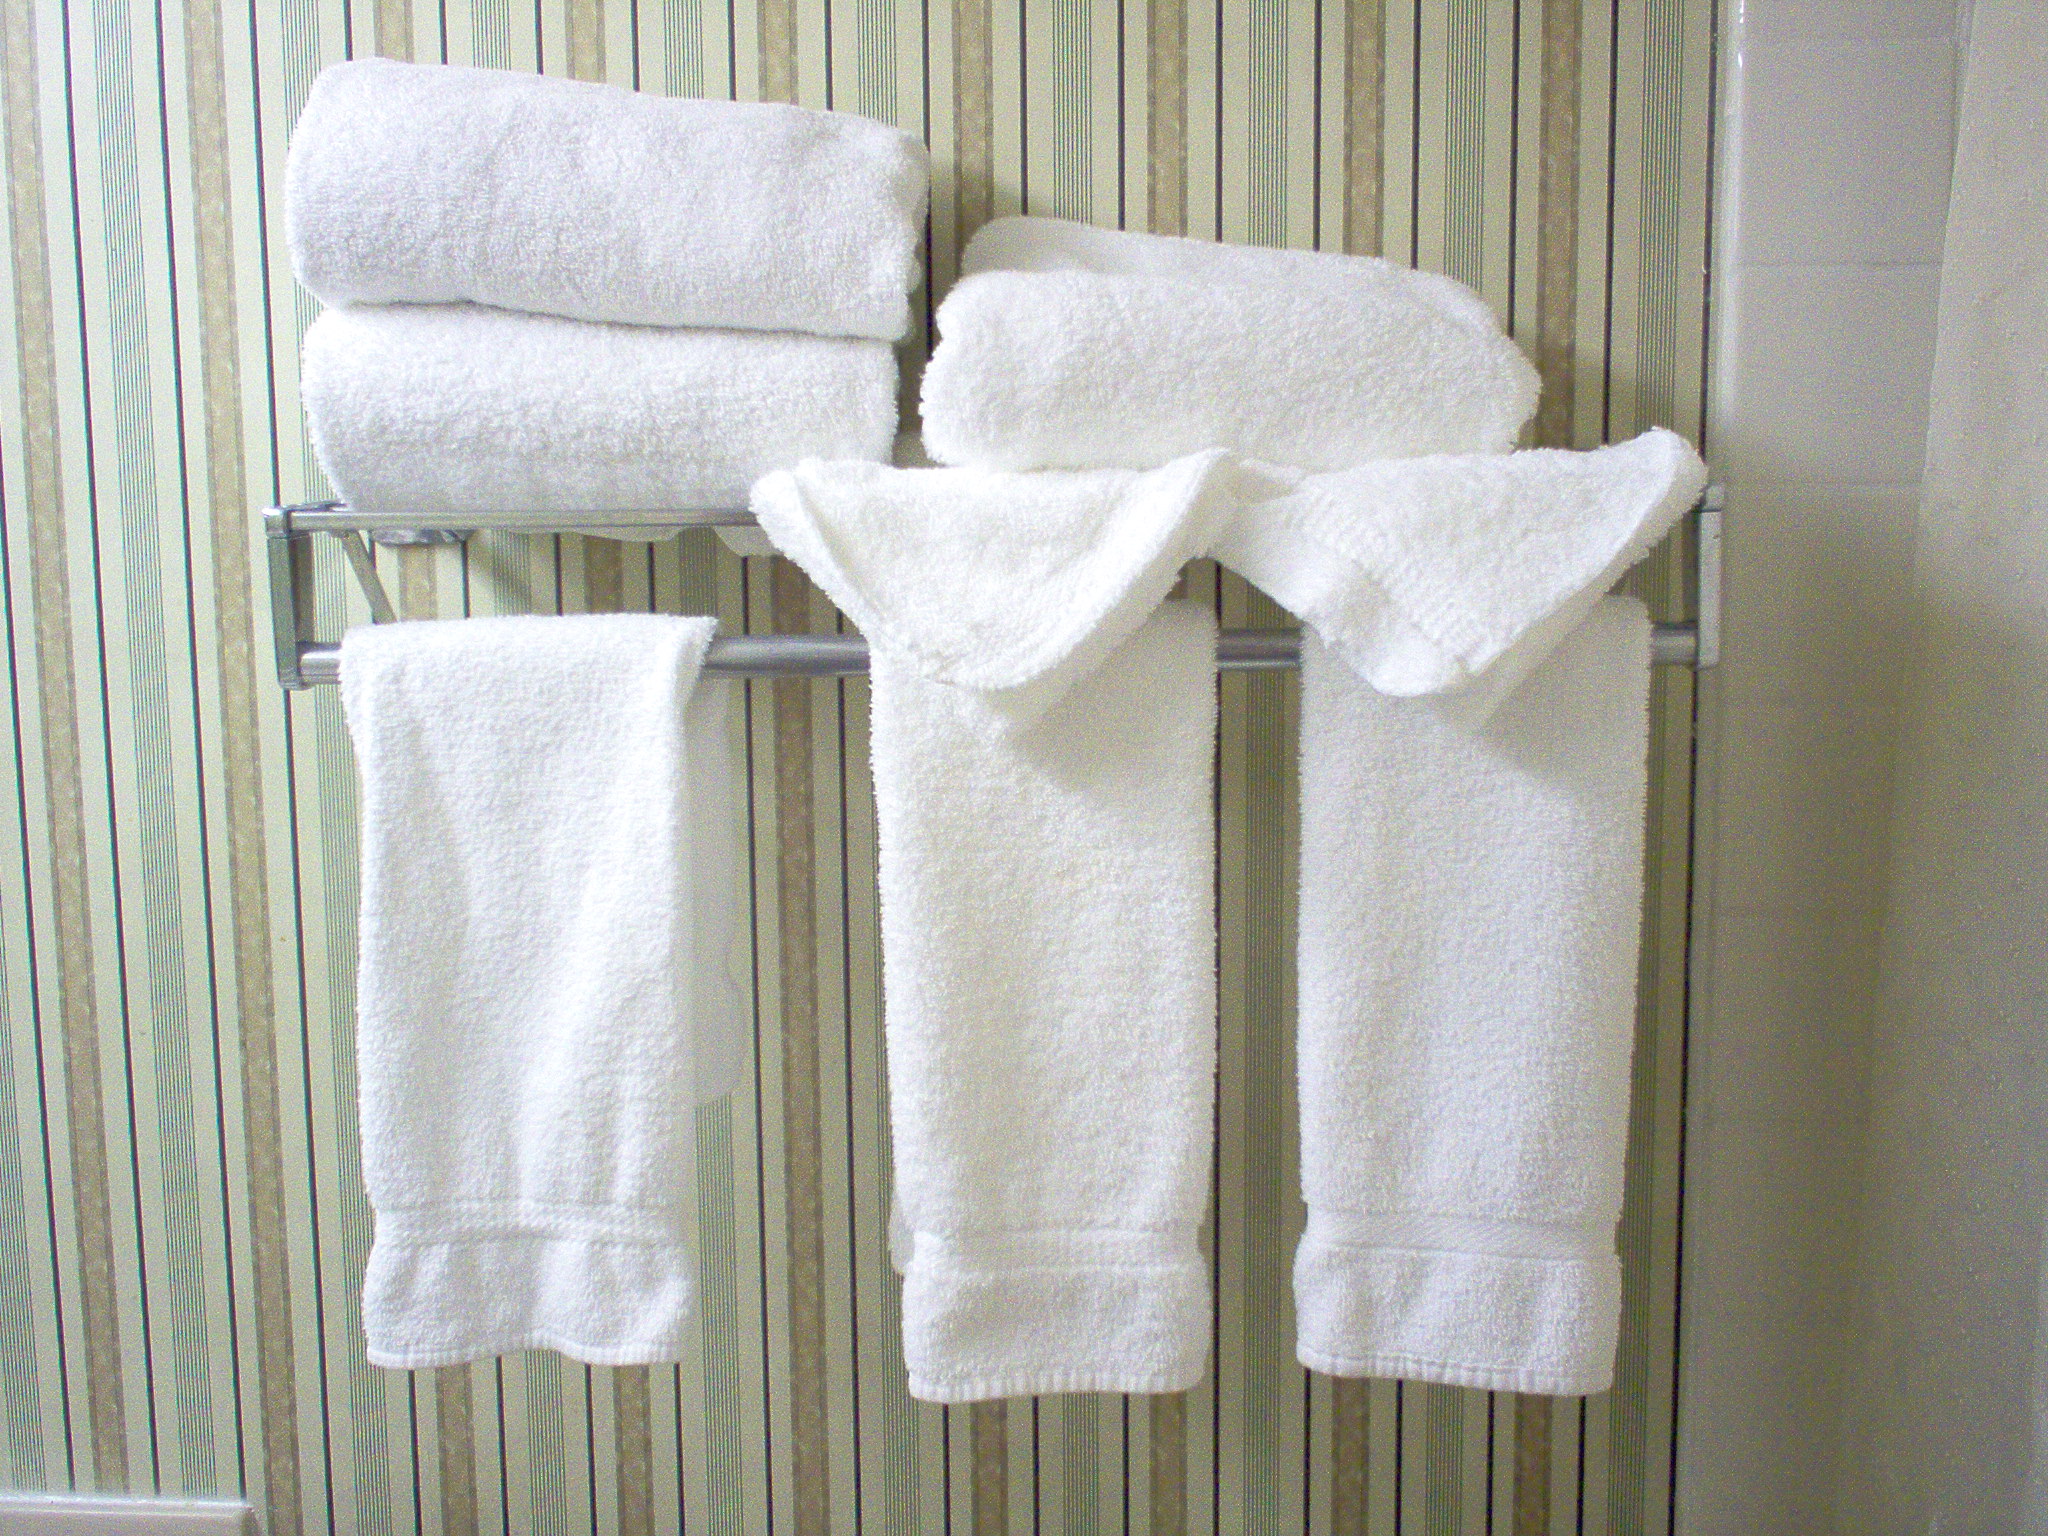 Полотенца нужно менять. Полотенца в отеле. Полотенца в ванной. Полотенца в гостиничном номере. Номера на полотенца.